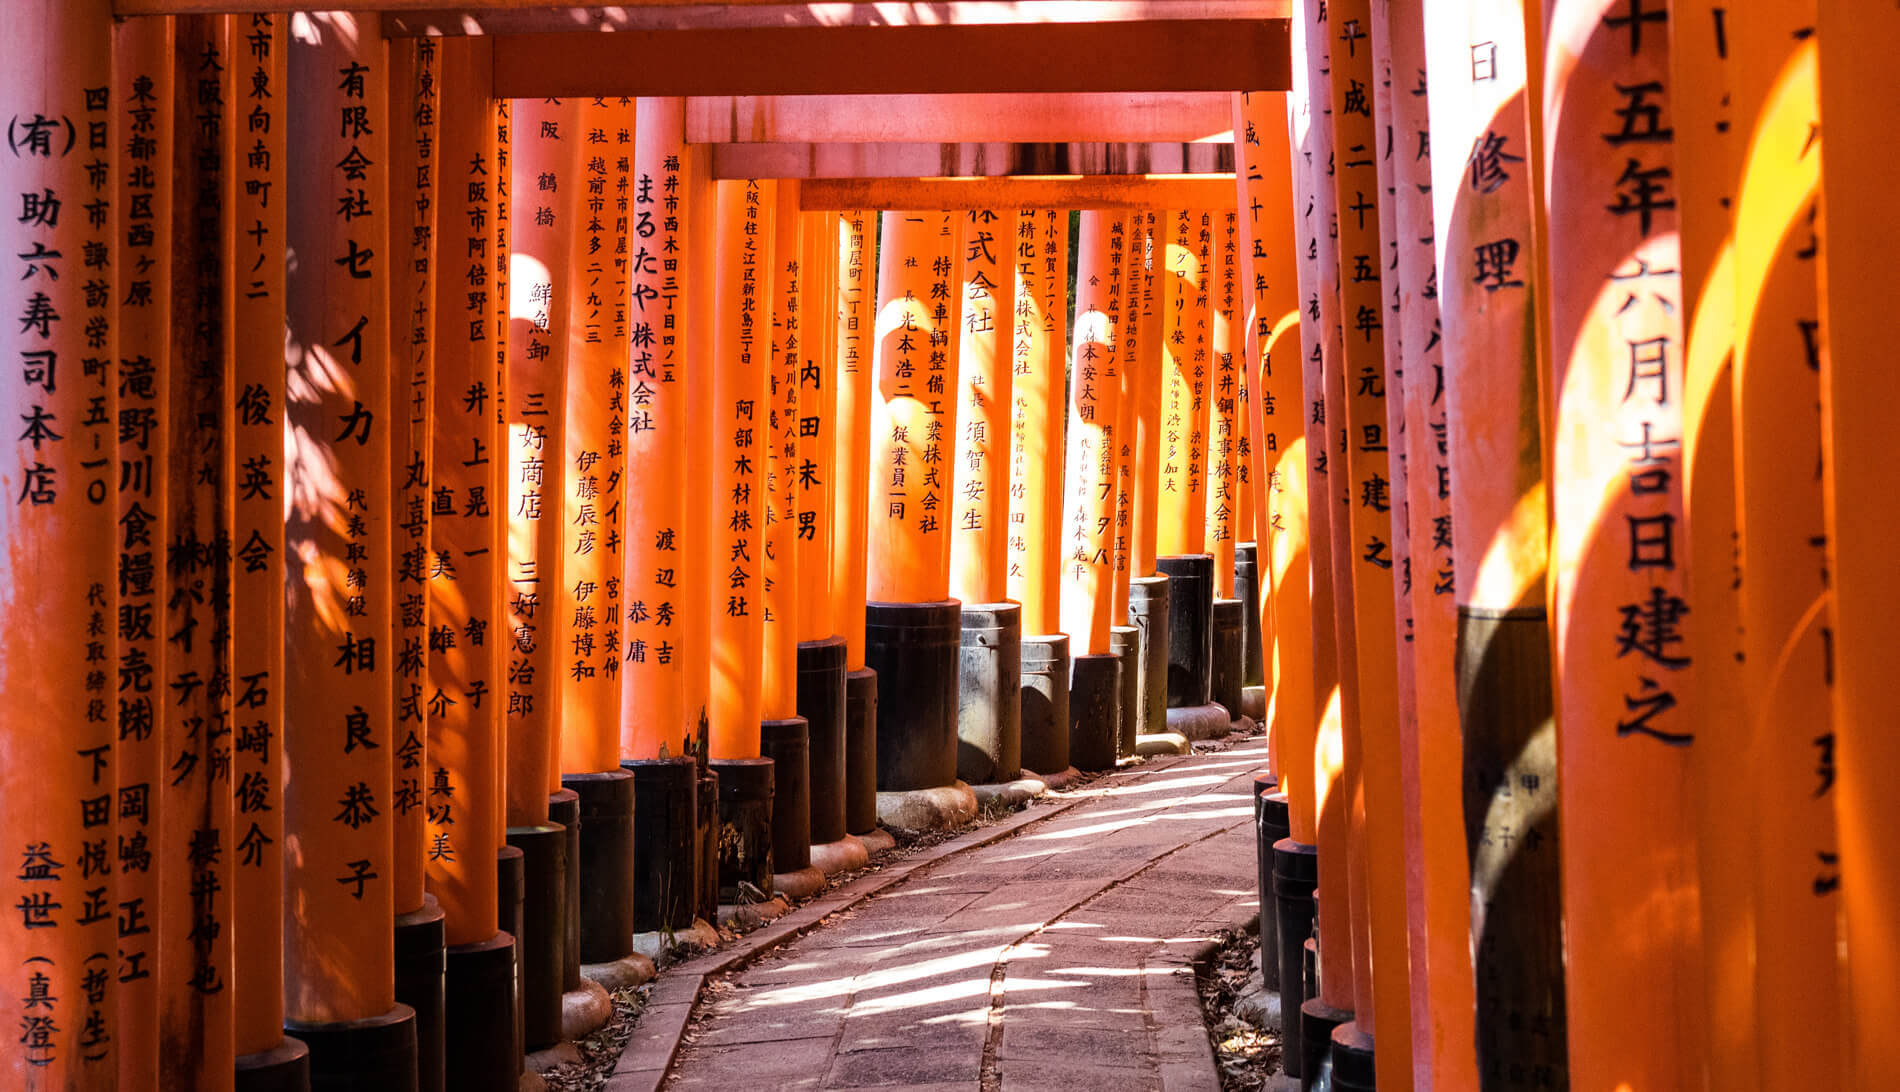 Vermillion torii gates of Fushimi Inari Taisha Shrine in Kyoto, Japan